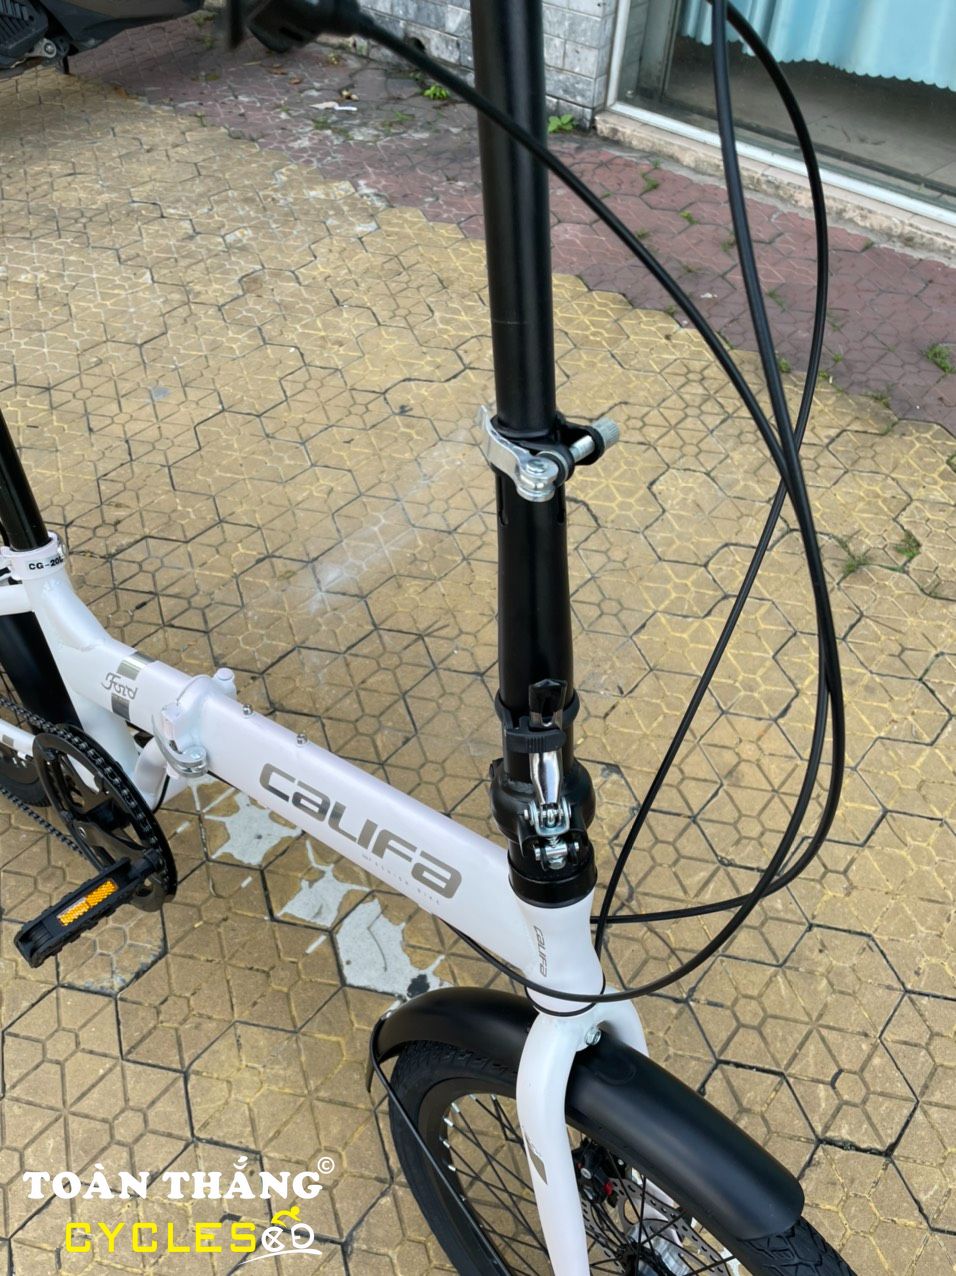 Xe đạp gấp Califa 2021 20inch White